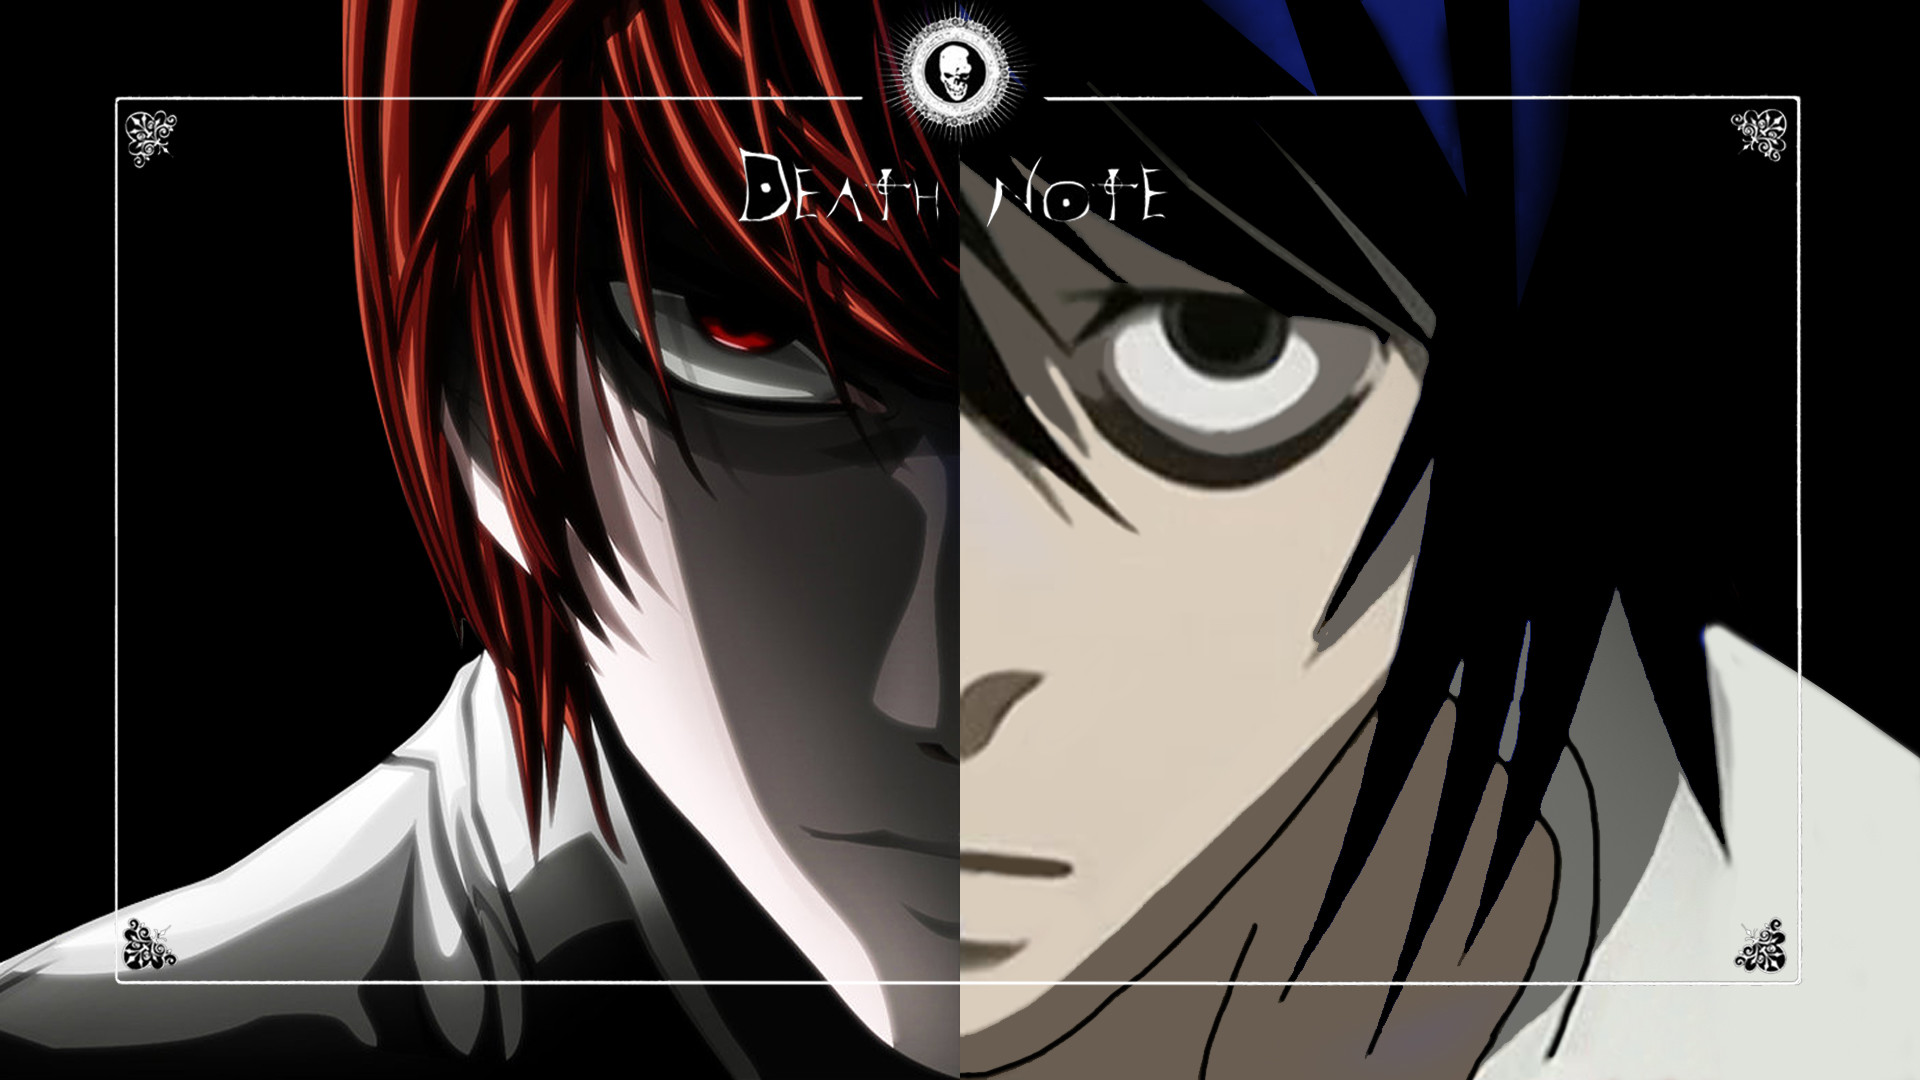 1920x1080 ... Death Note - Kira vs L by ElErnie